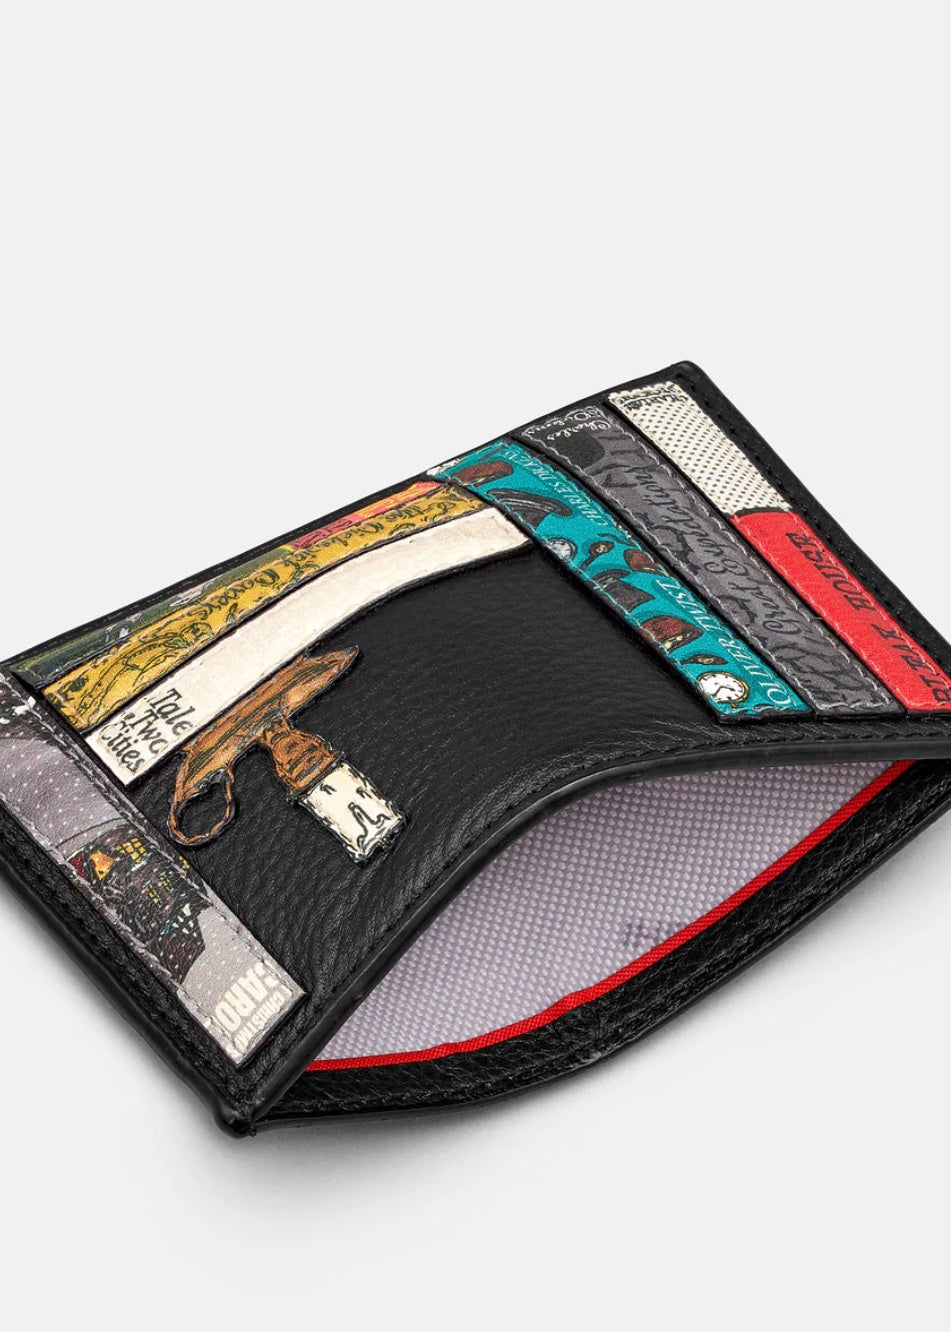 Yoshi Leather - Dickinson Bookworm Card Holder / Black